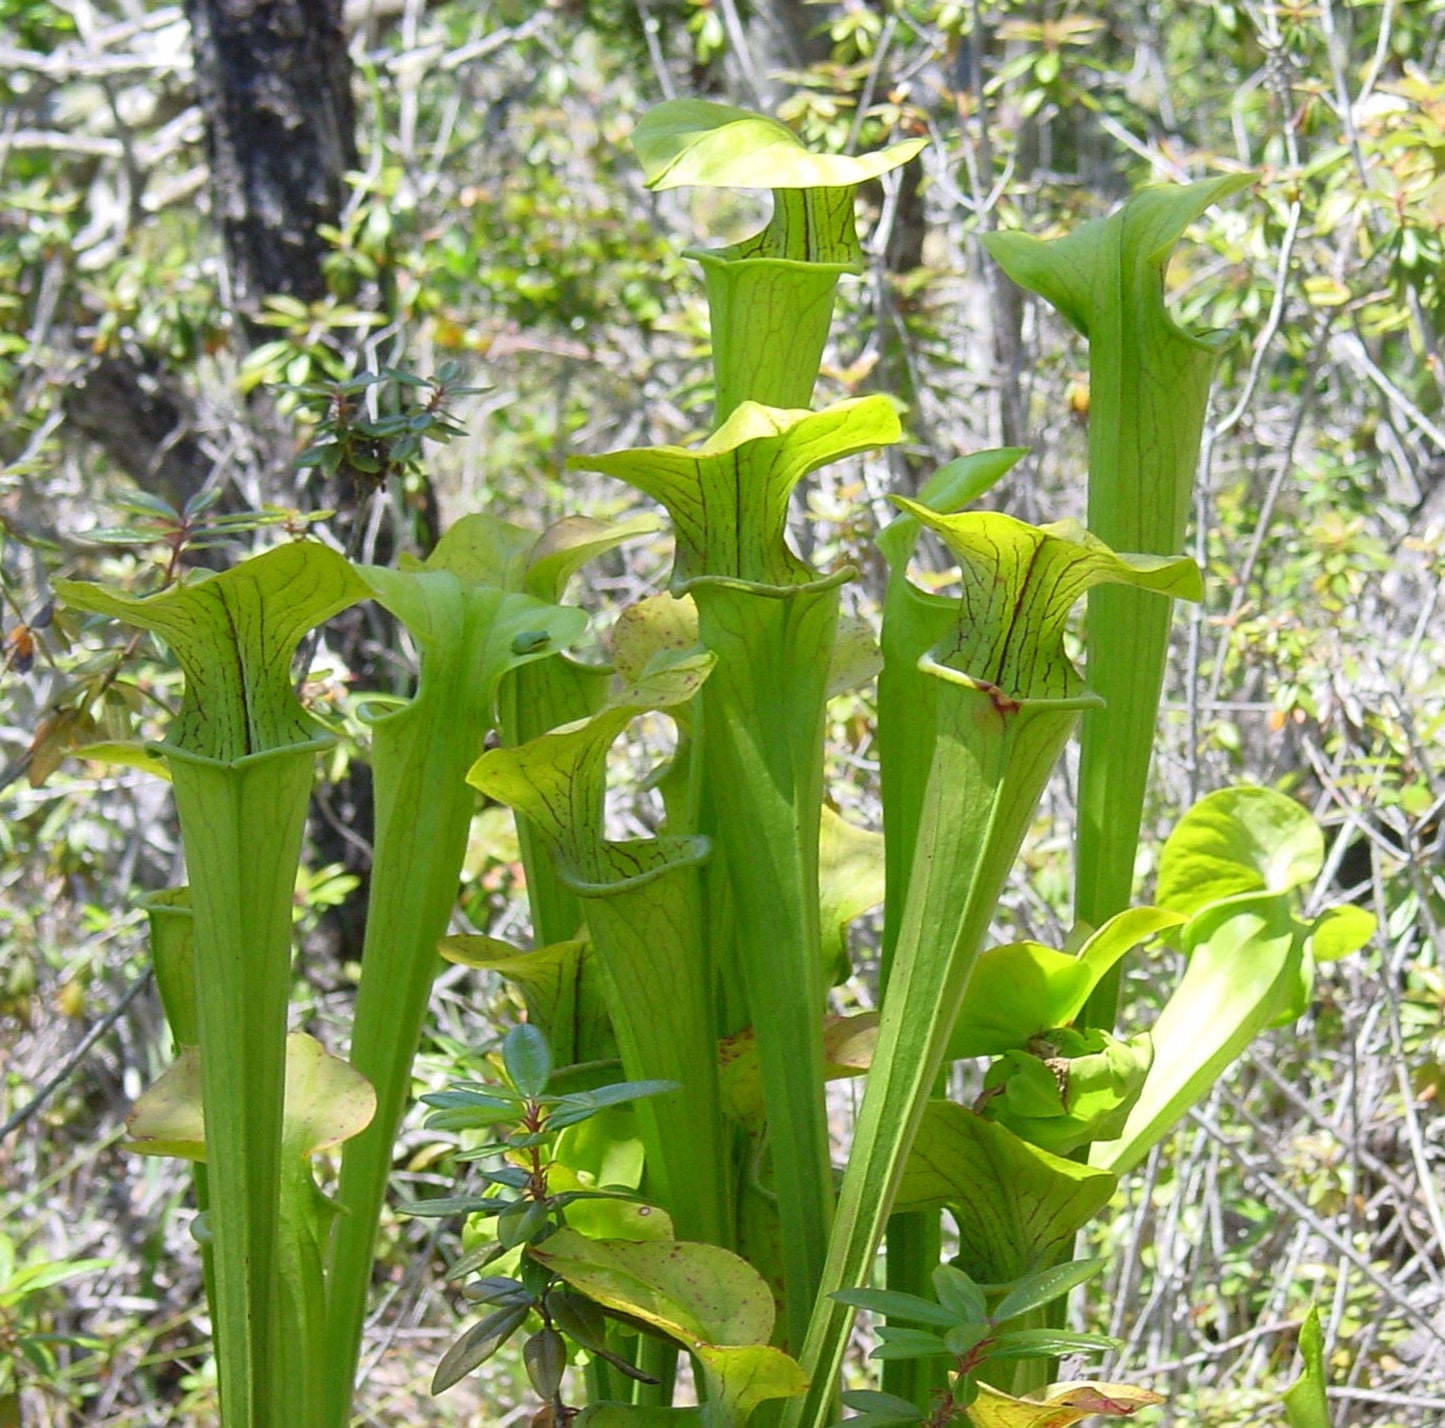 Sarracenia Oreophila * Green Pitcher Plant * Carnivorous Plant * 10 Seeds *